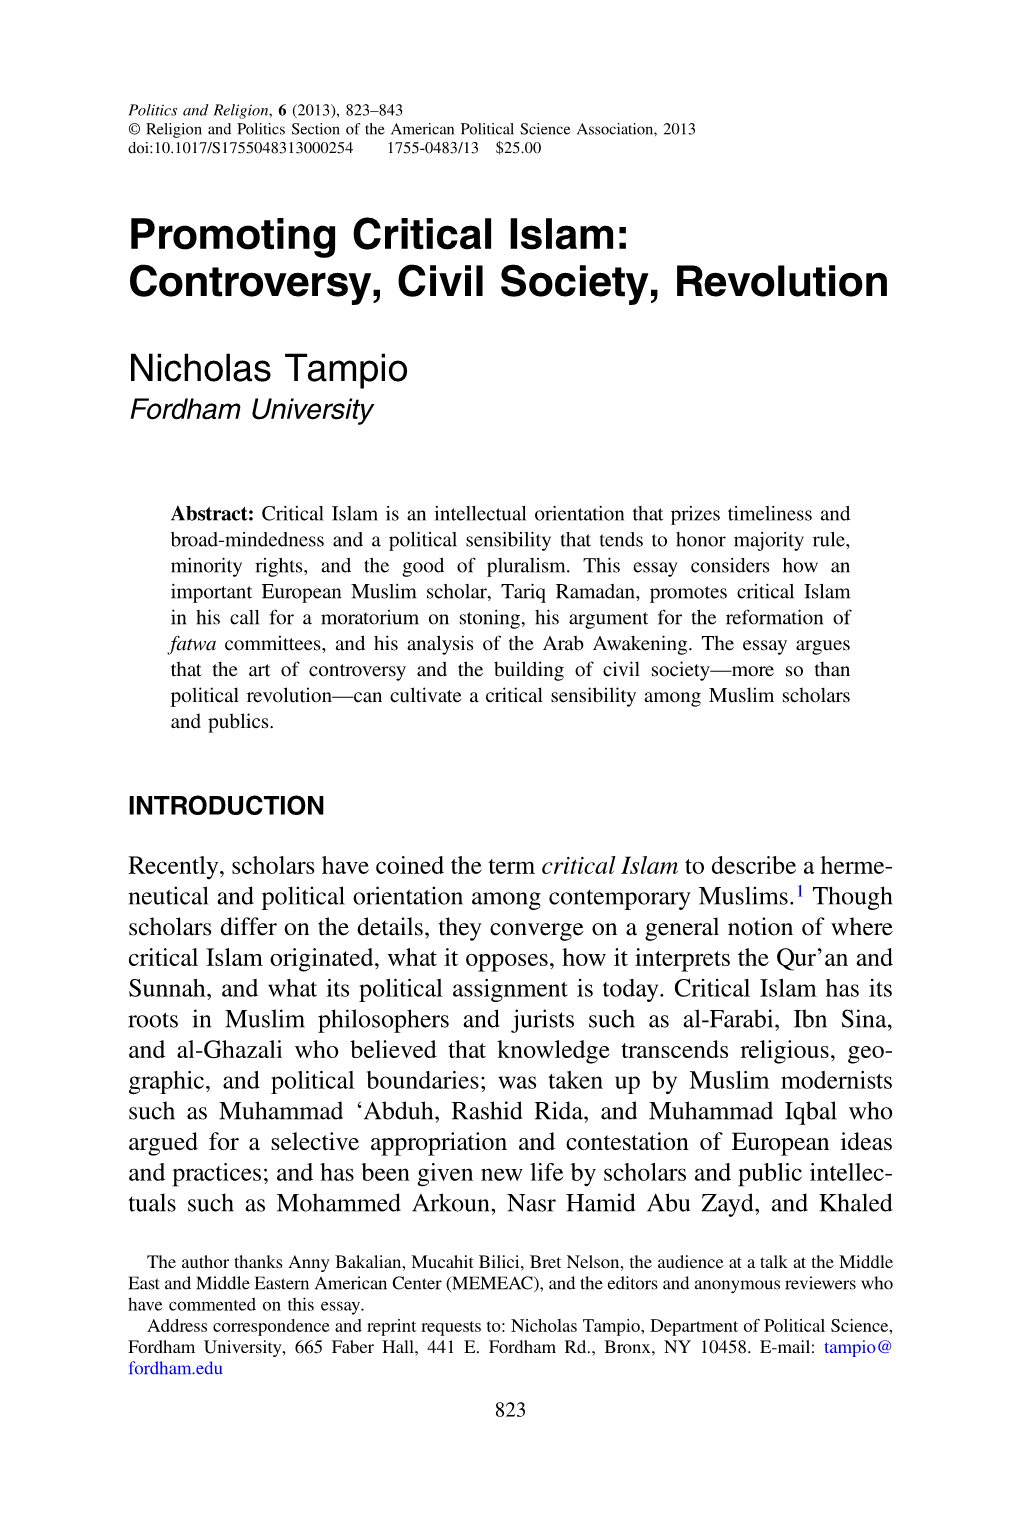 Promoting Critical Islam: Controversy, Civil Society, Revolution